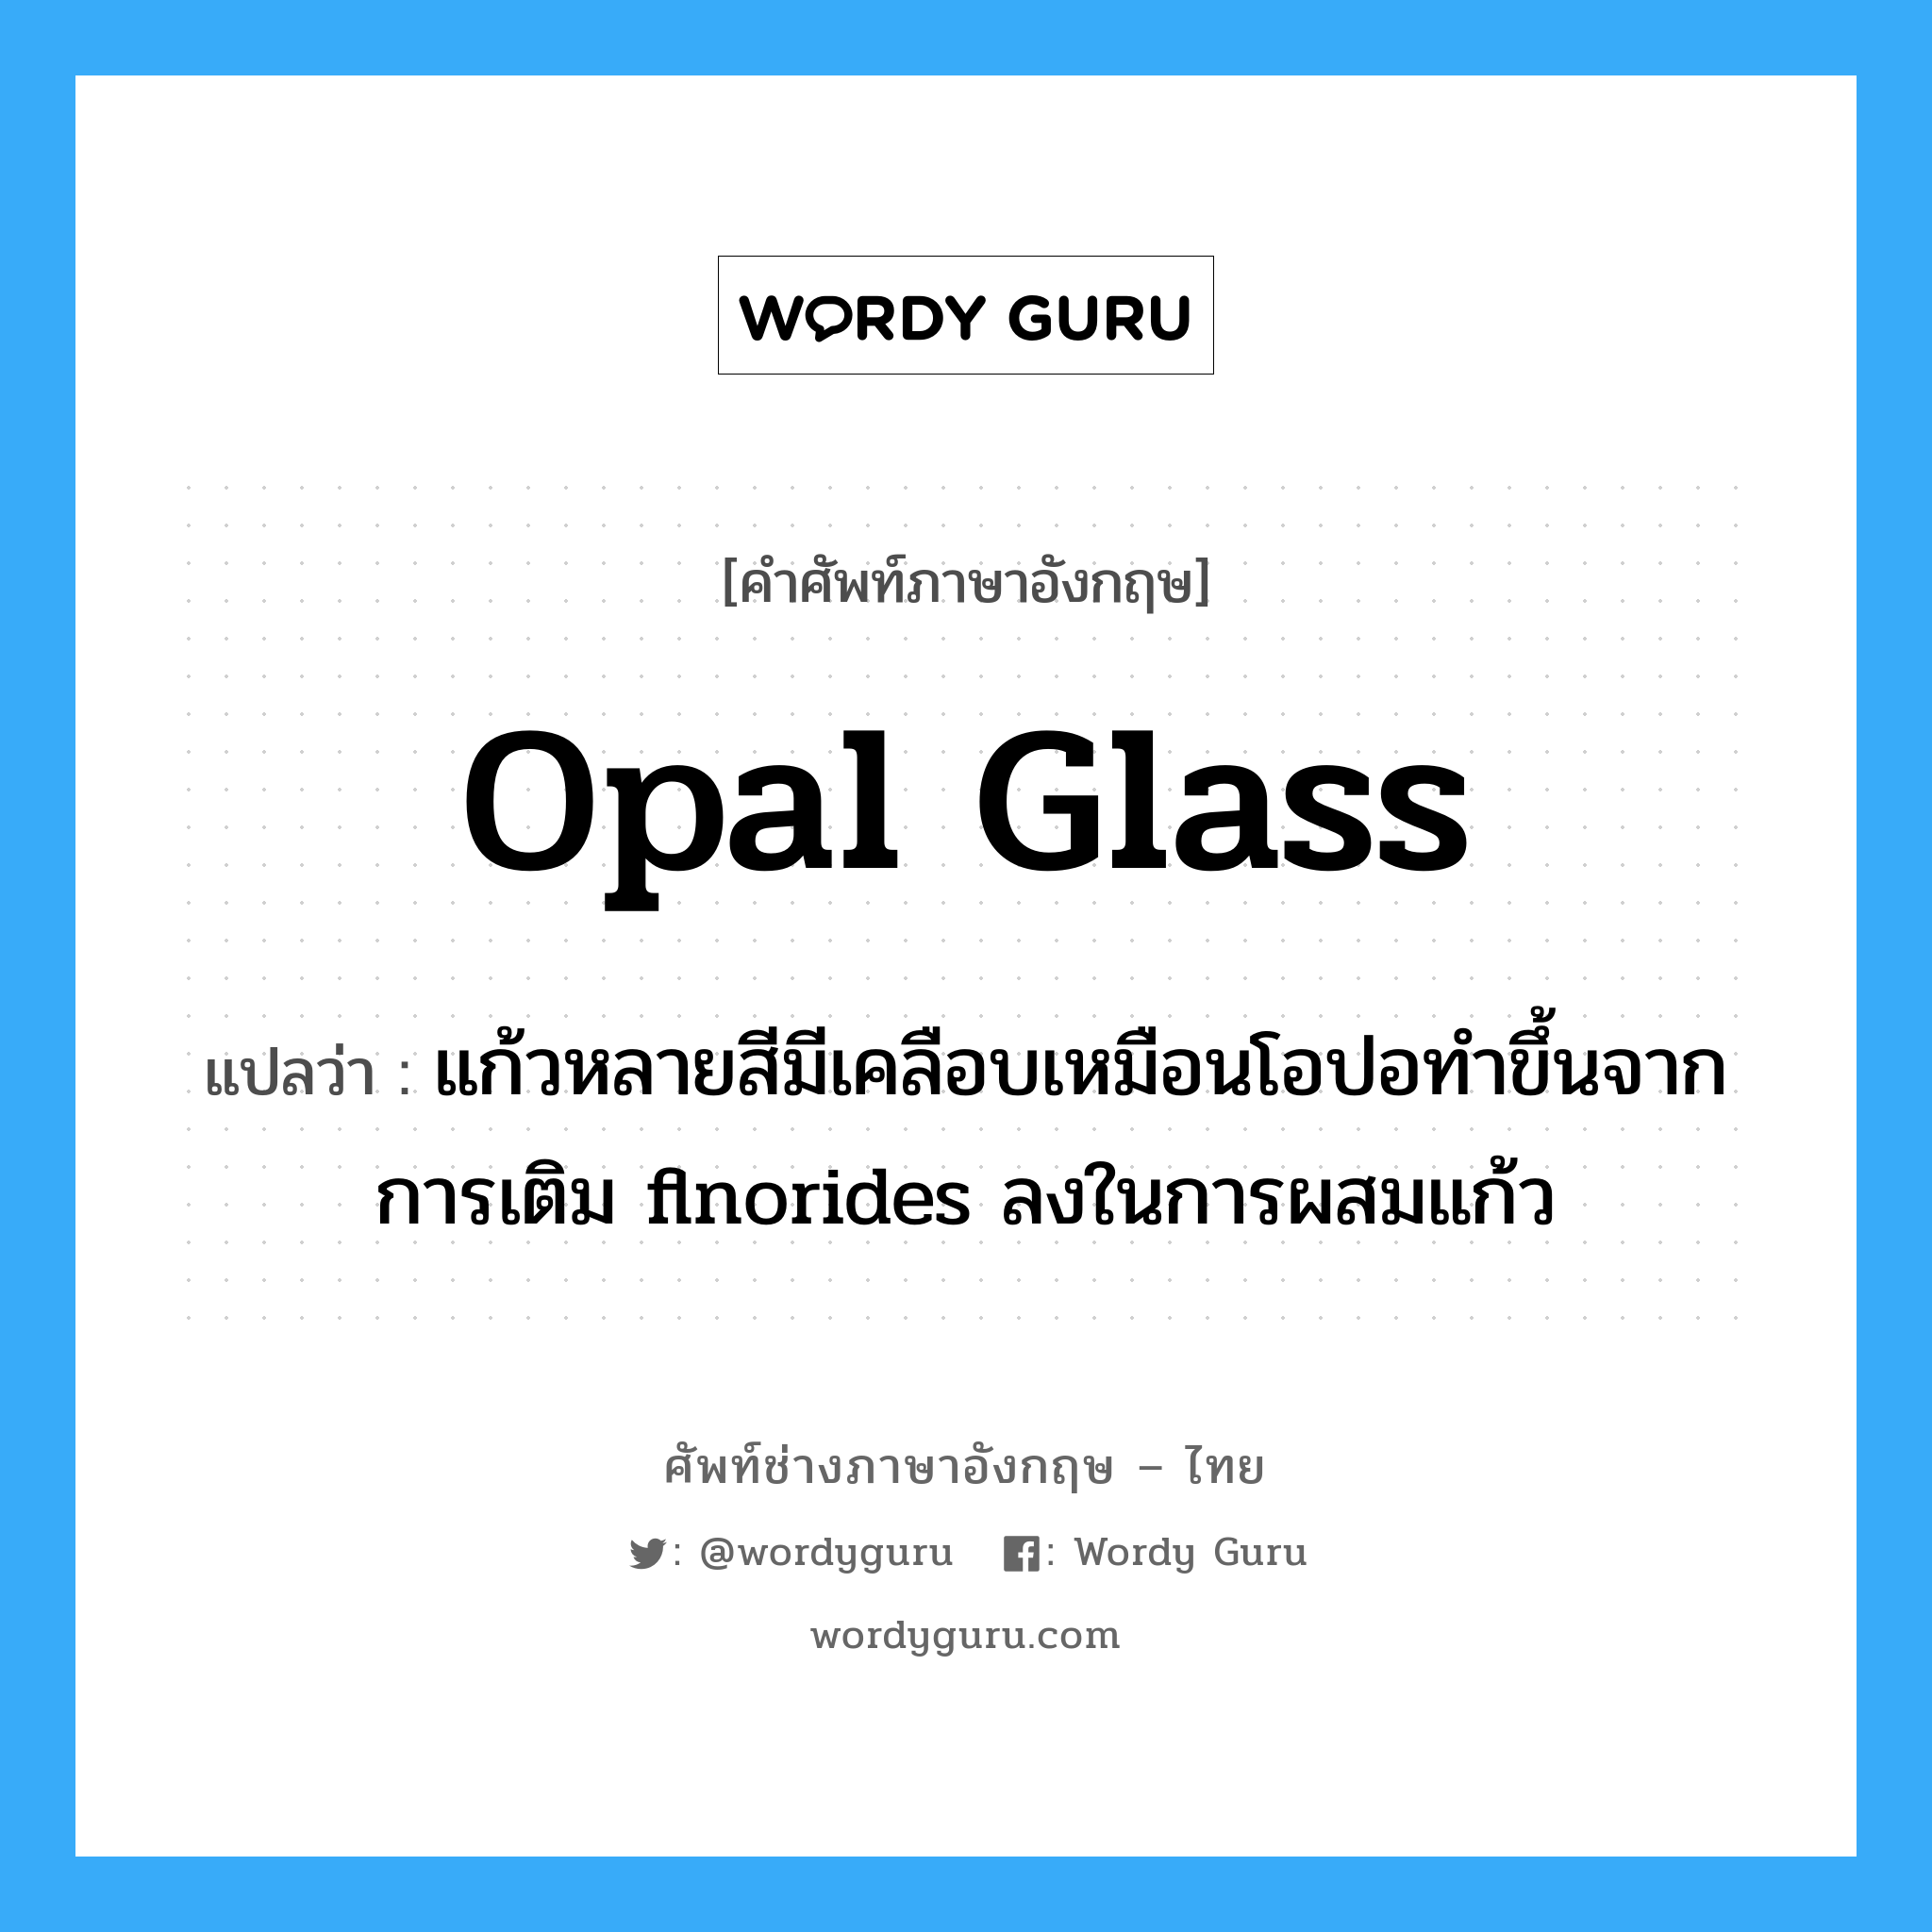 opal glass แปลว่า?, คำศัพท์ช่างภาษาอังกฤษ - ไทย opal glass คำศัพท์ภาษาอังกฤษ opal glass แปลว่า แก้วหลายสีมีเคลือบเหมือนโอปอทำขึ้นจากการเติม flnorides ลงในการผสมแก้ว